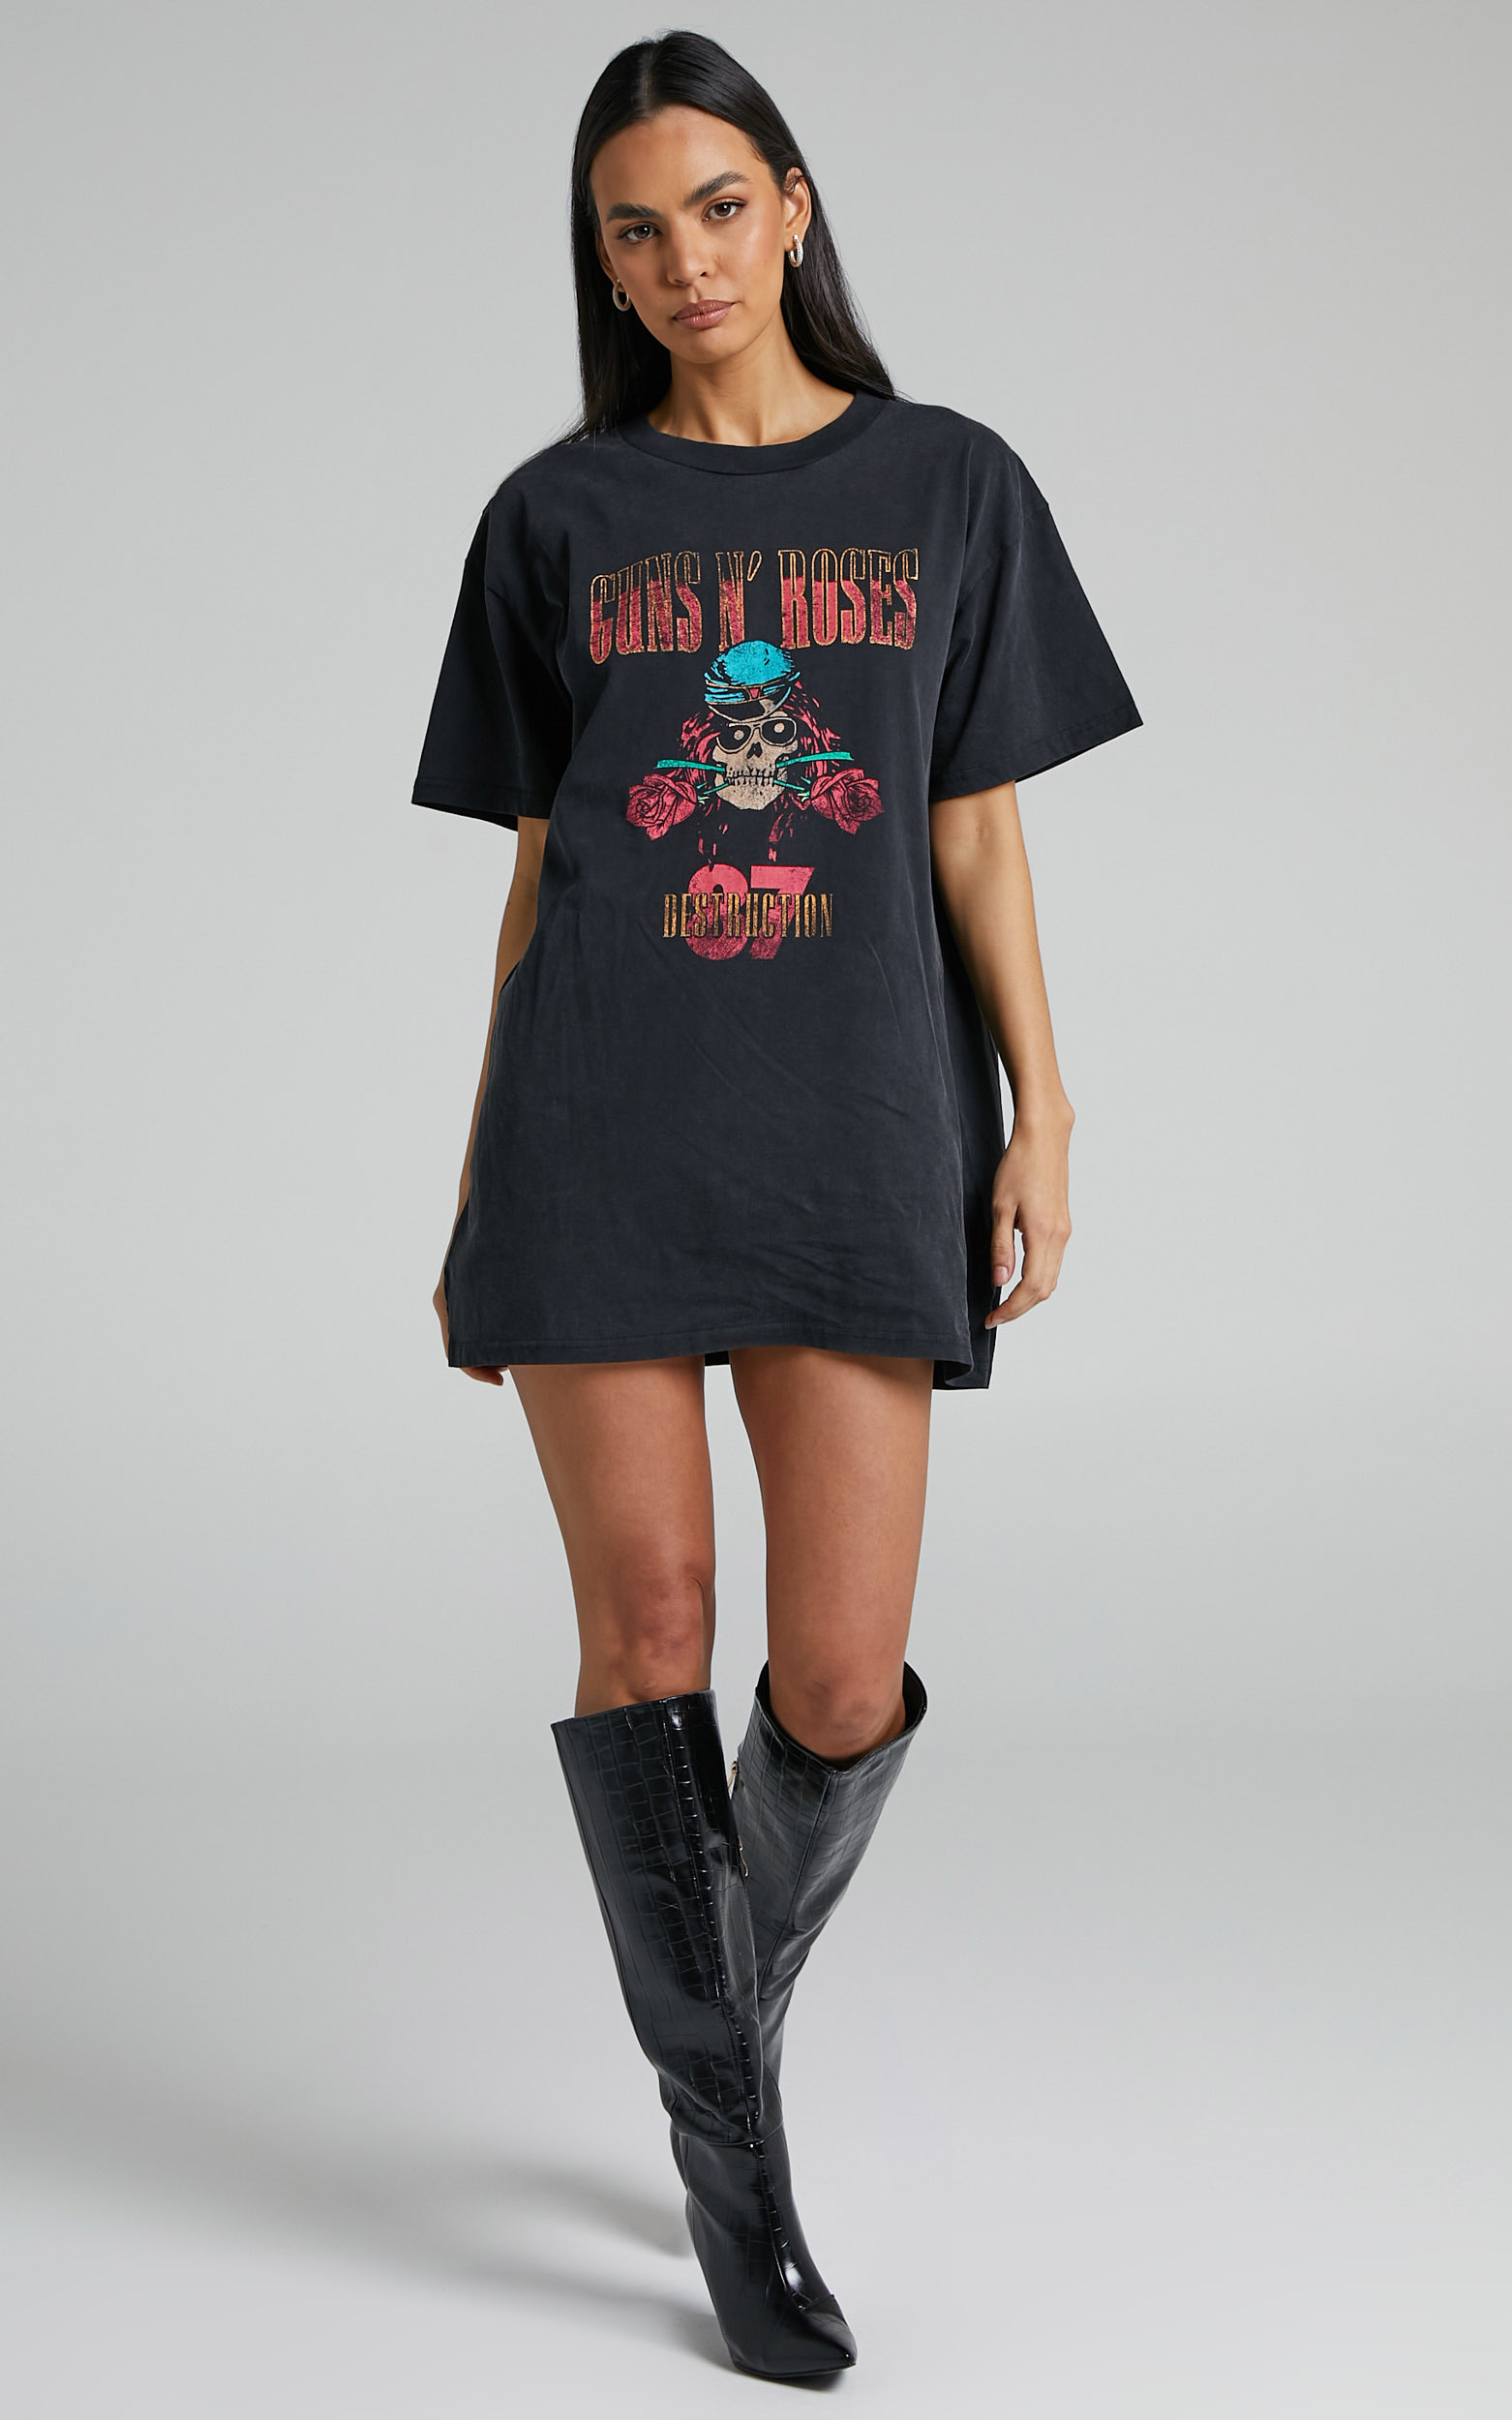 Universal Music - Guns N' Roses Tee Dress in Washed Black | Showpo USA